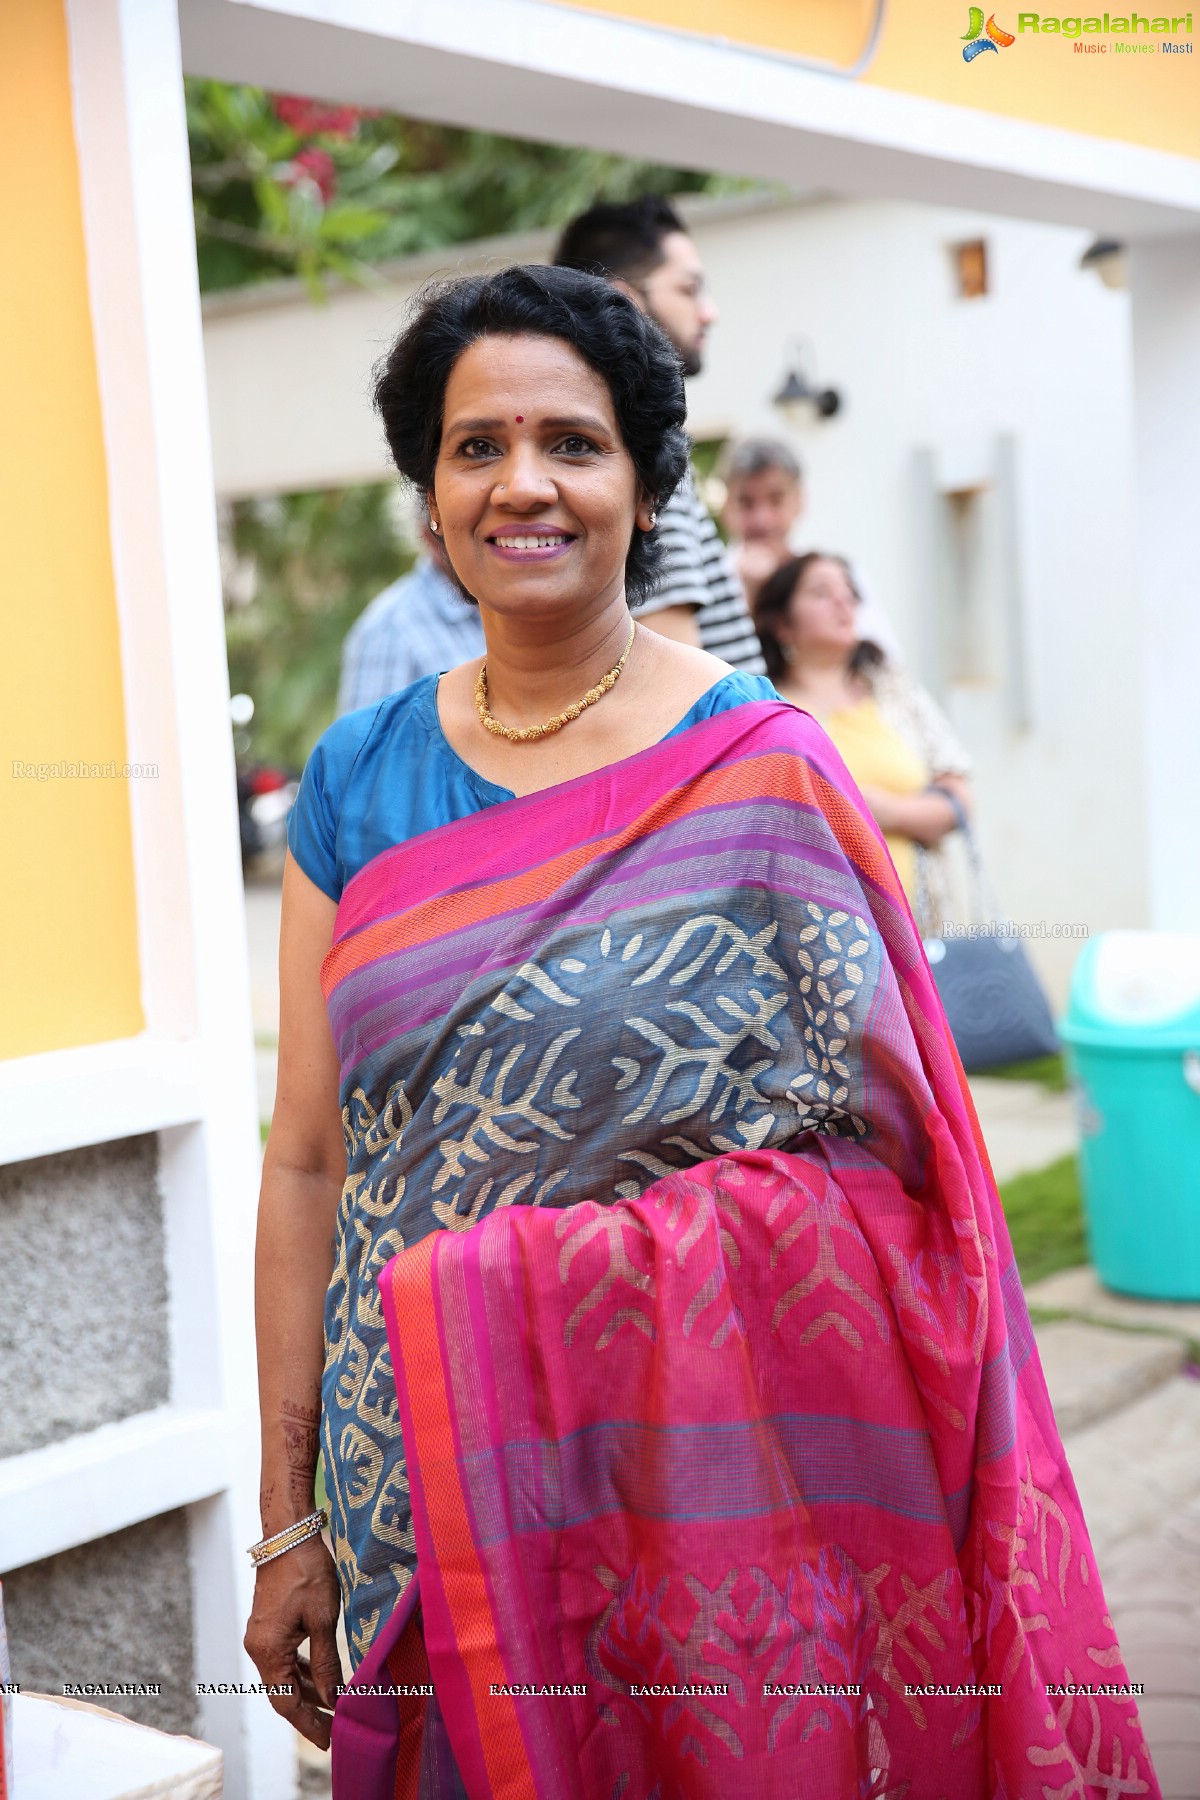 Vimala Narasimhan launches Blooms & Looms-A Weave of Ikebana & Saris at Saptaparni